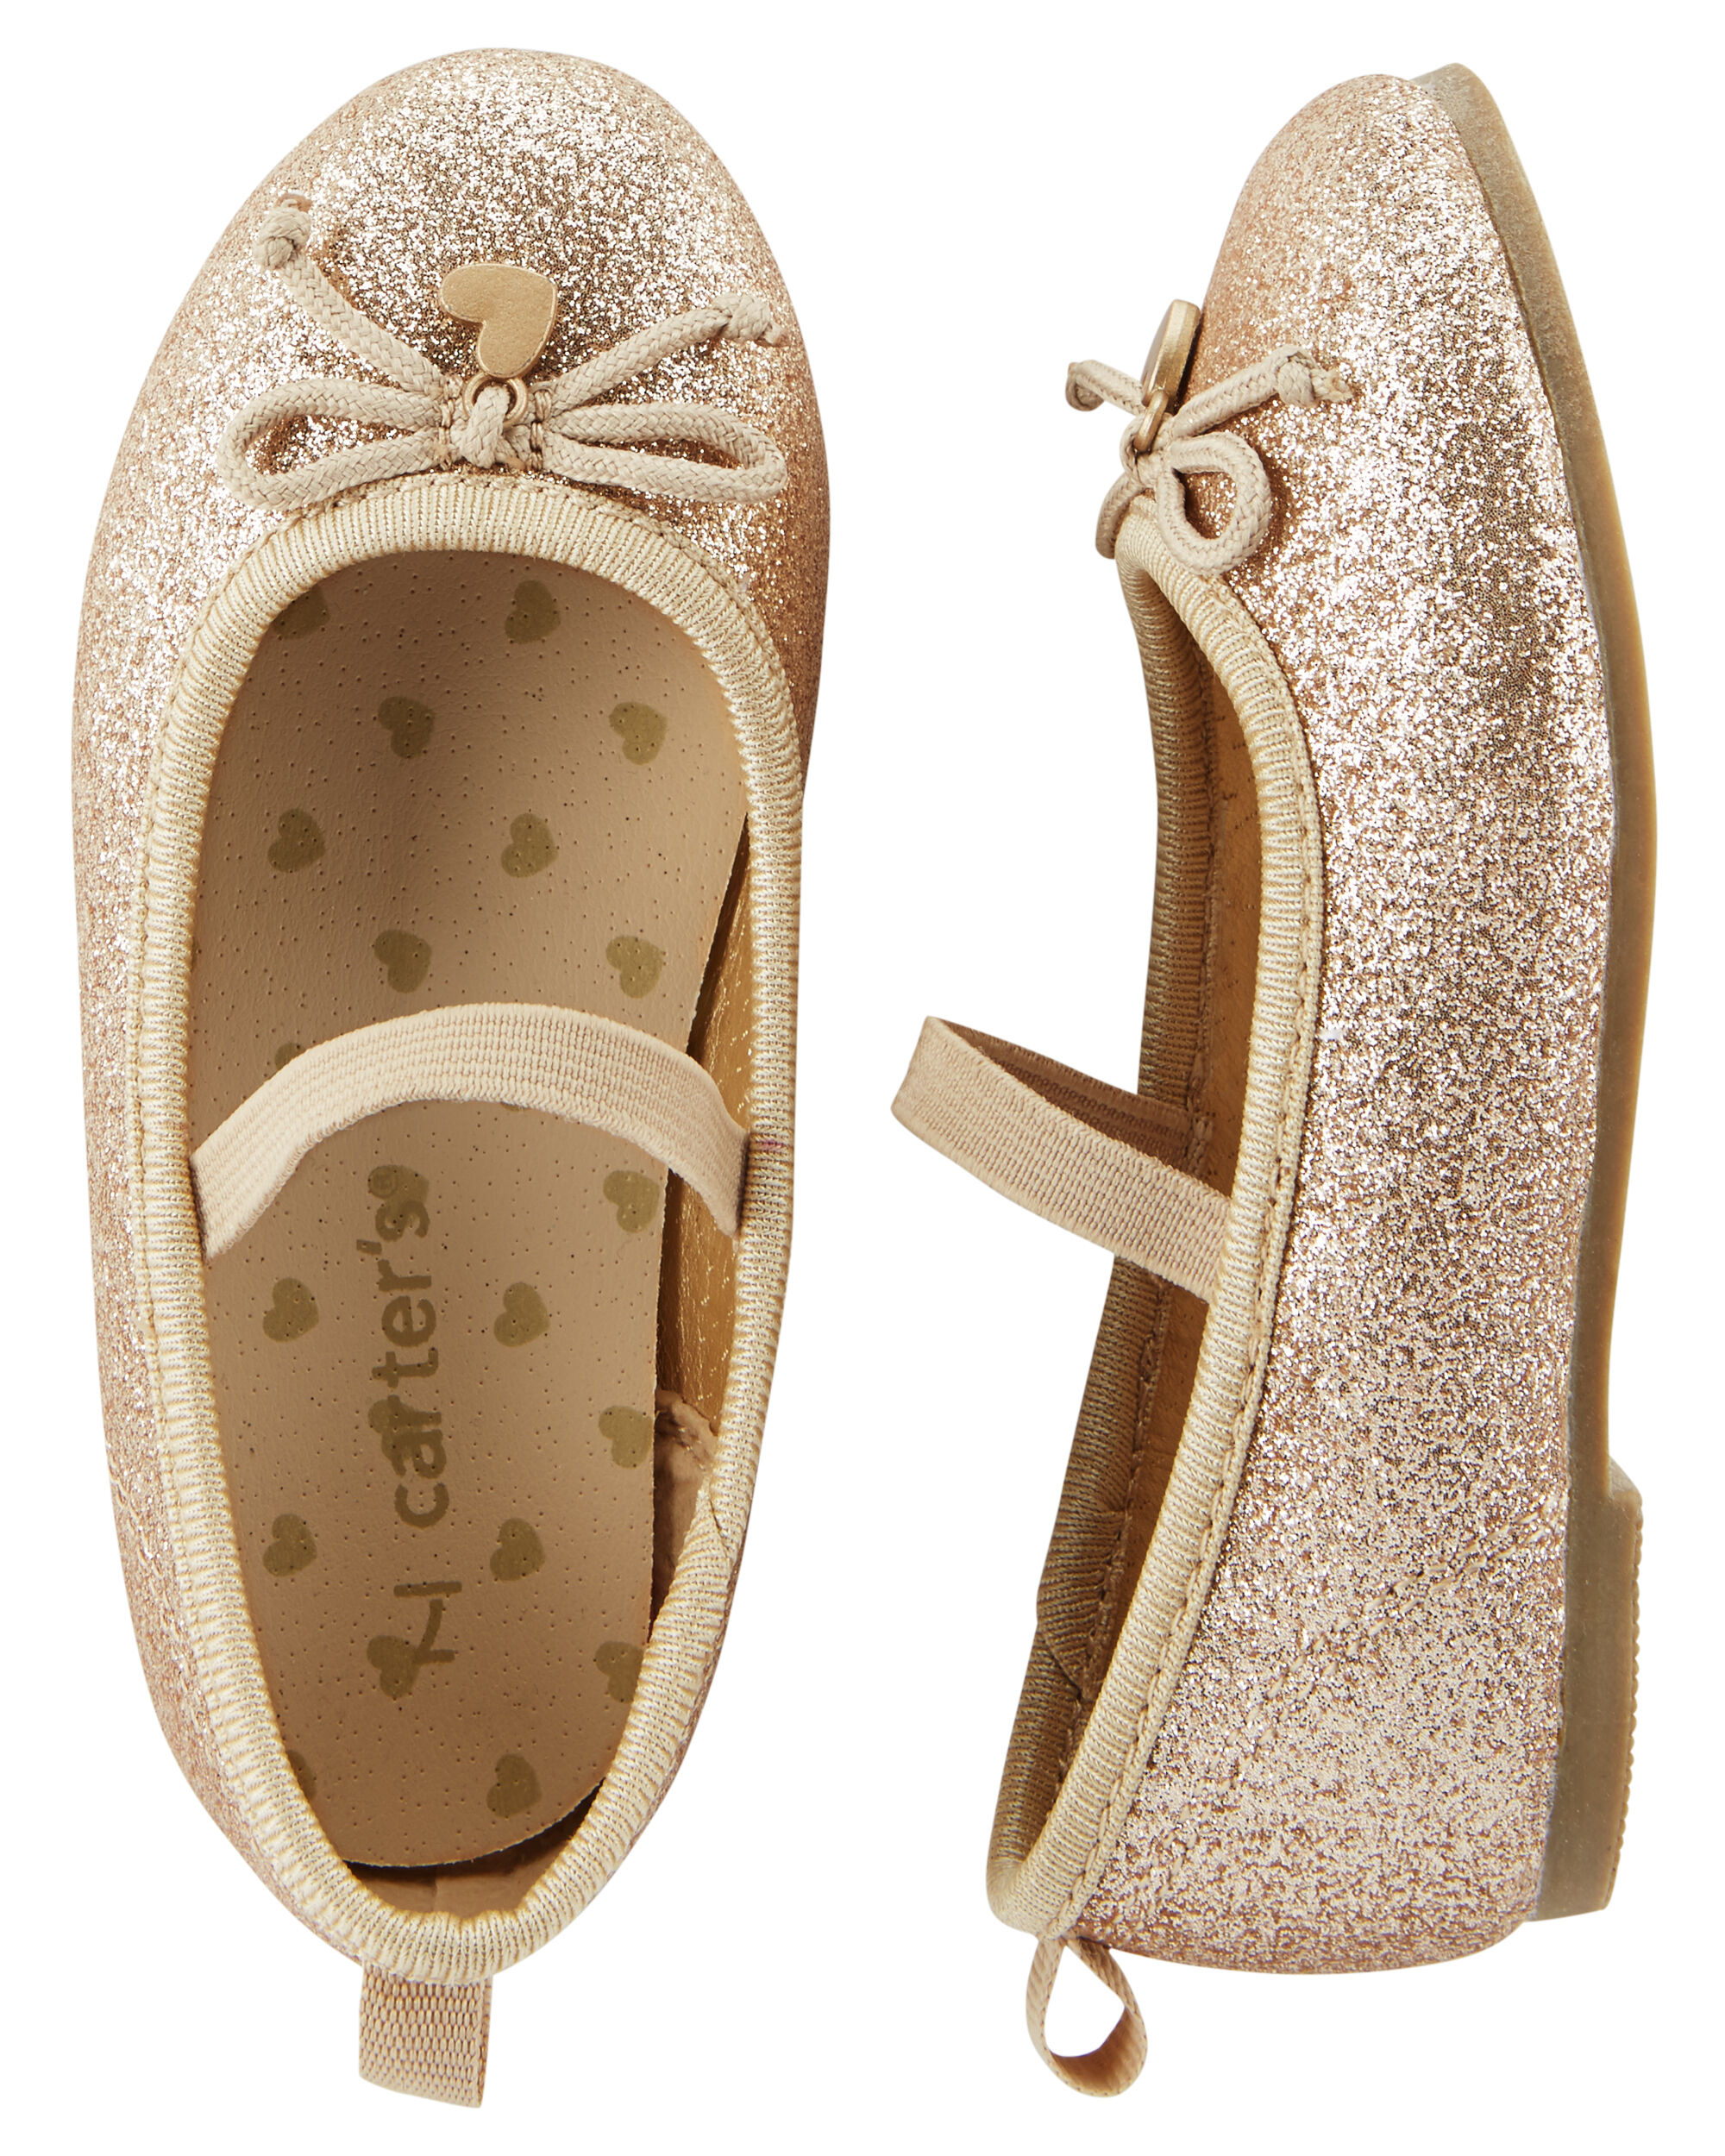 carter's gold glitter shoes